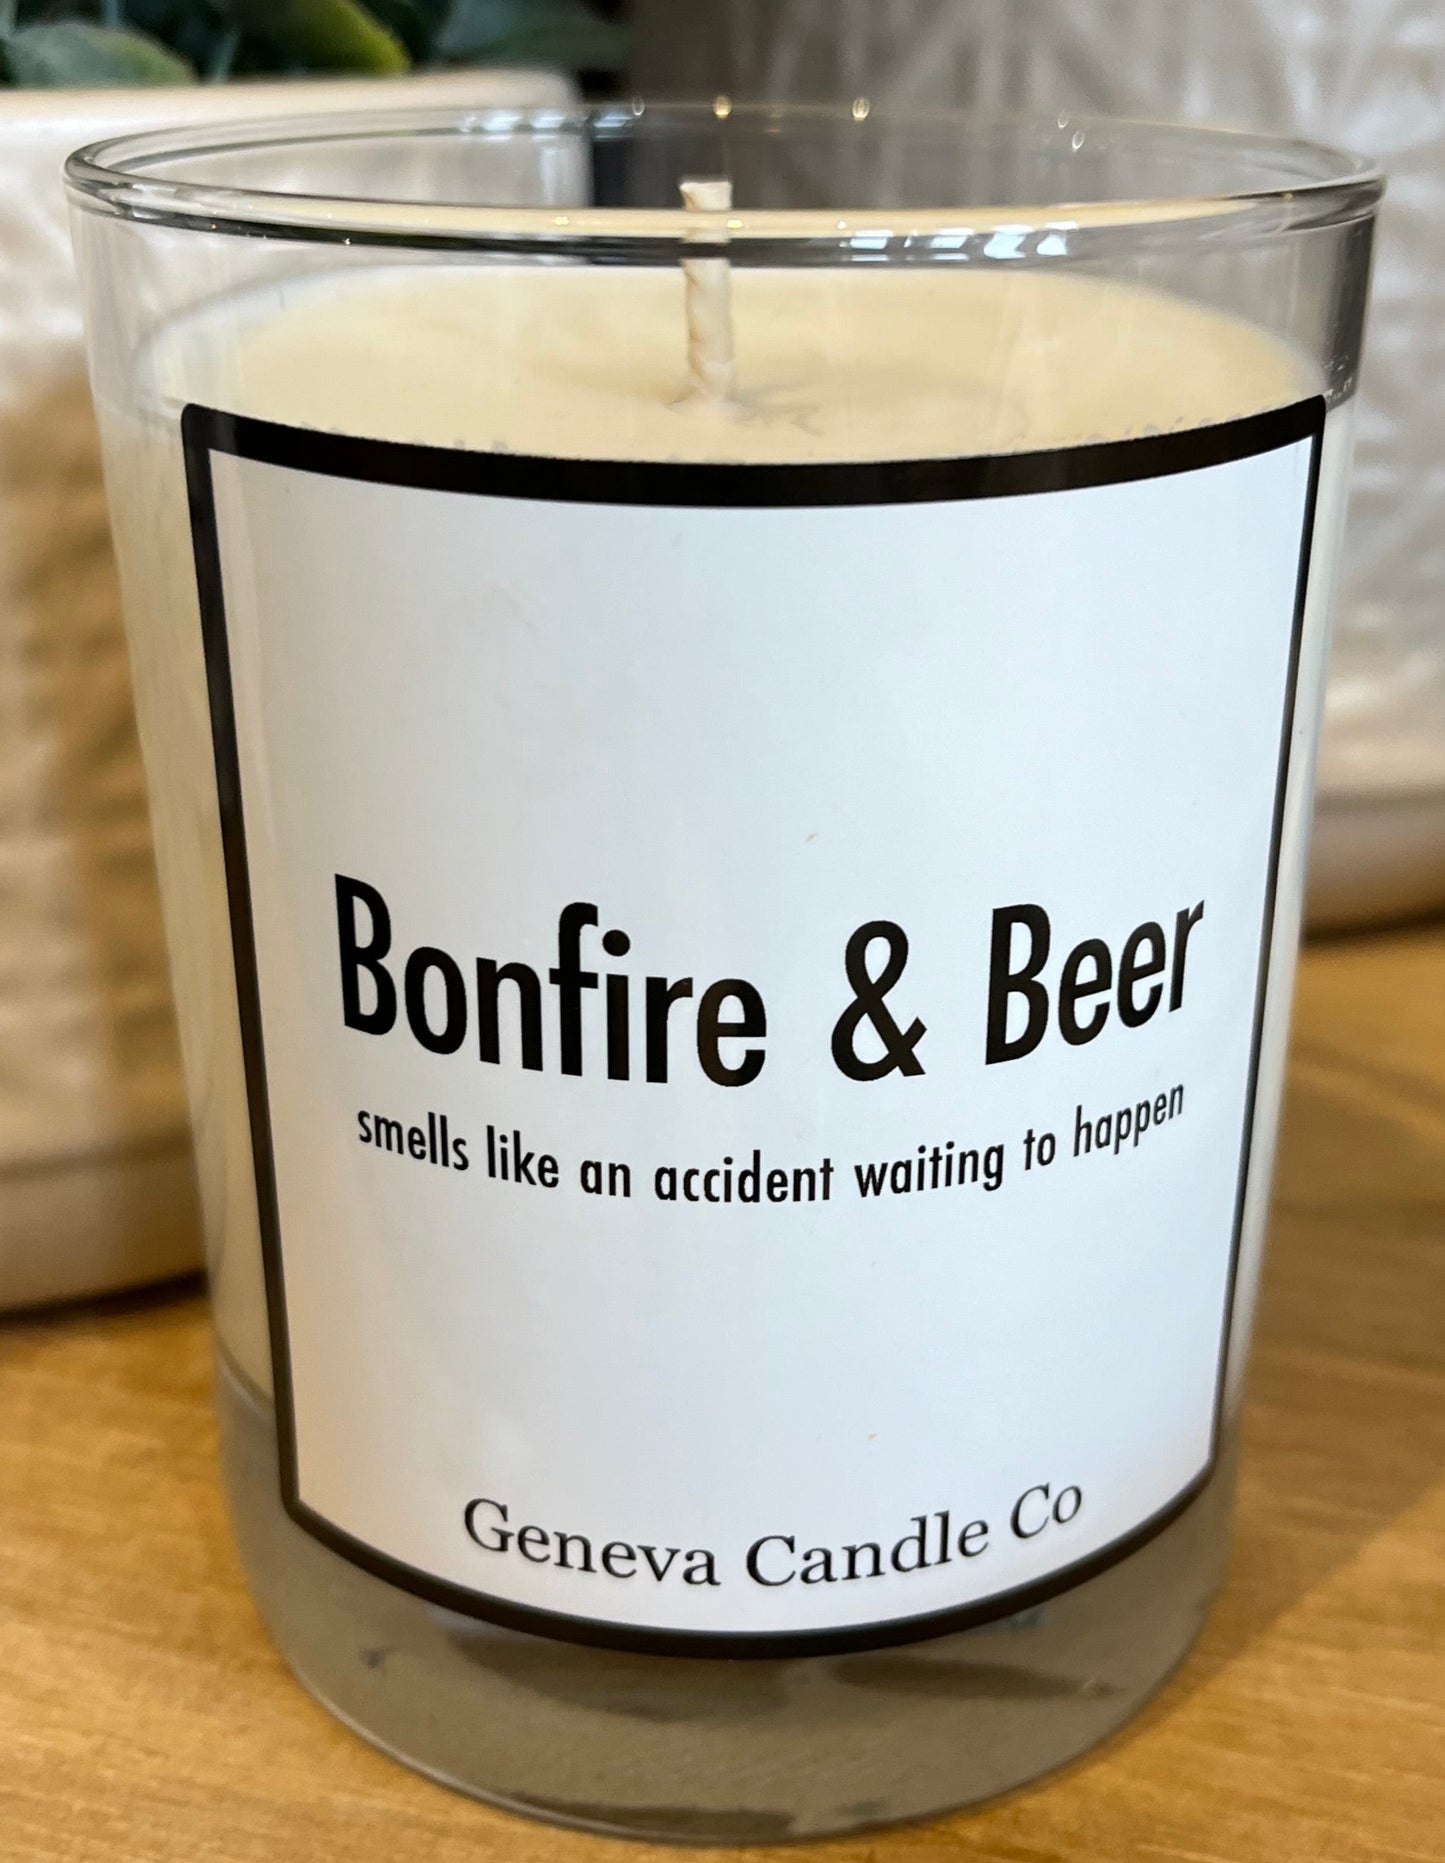 Geneva Candle Co